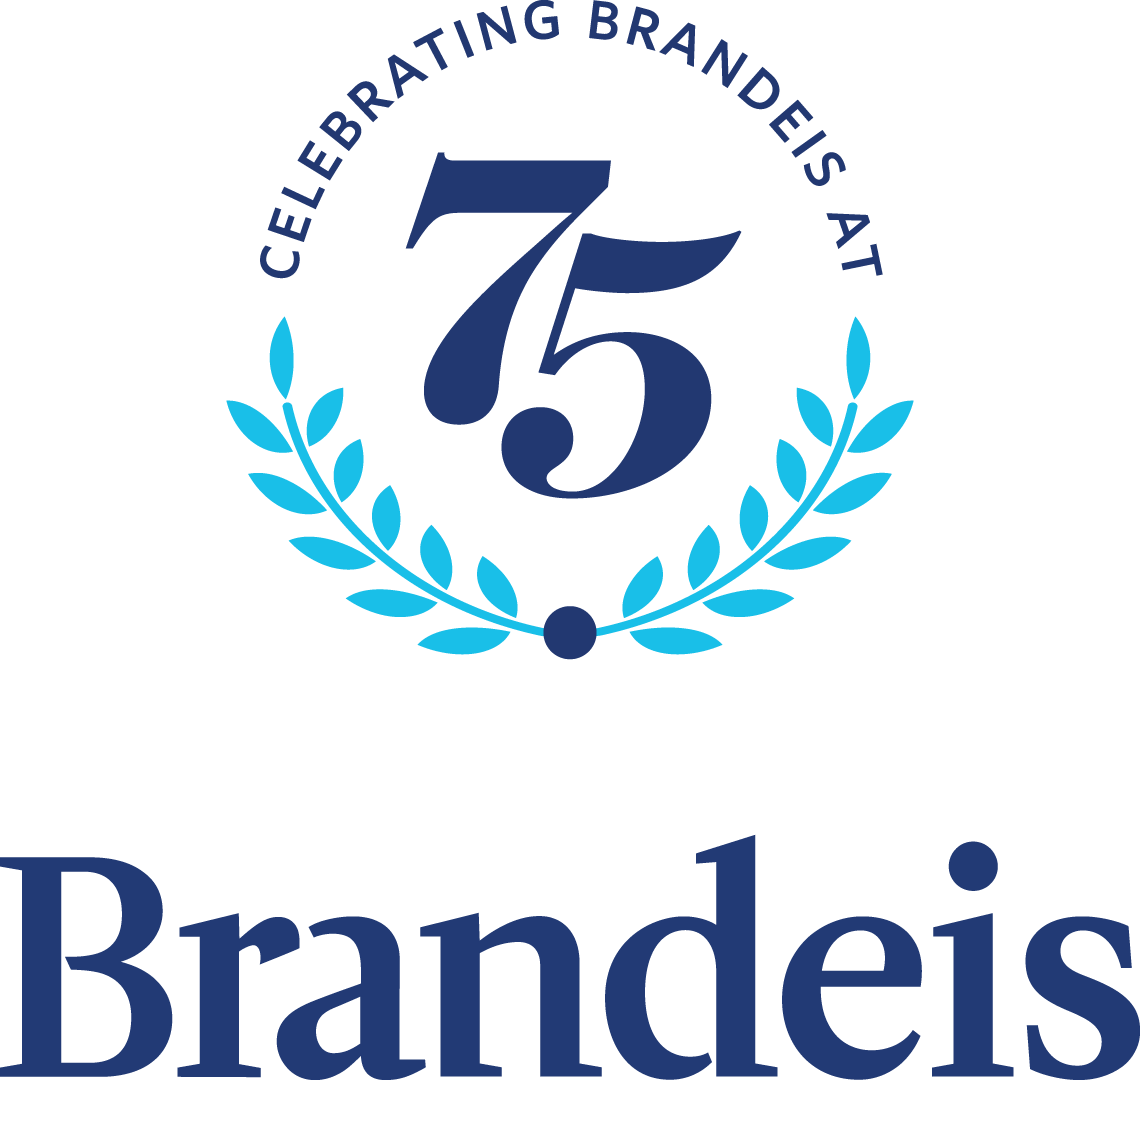 Logo with circular image which states "Celebrating Brandeis at 75"